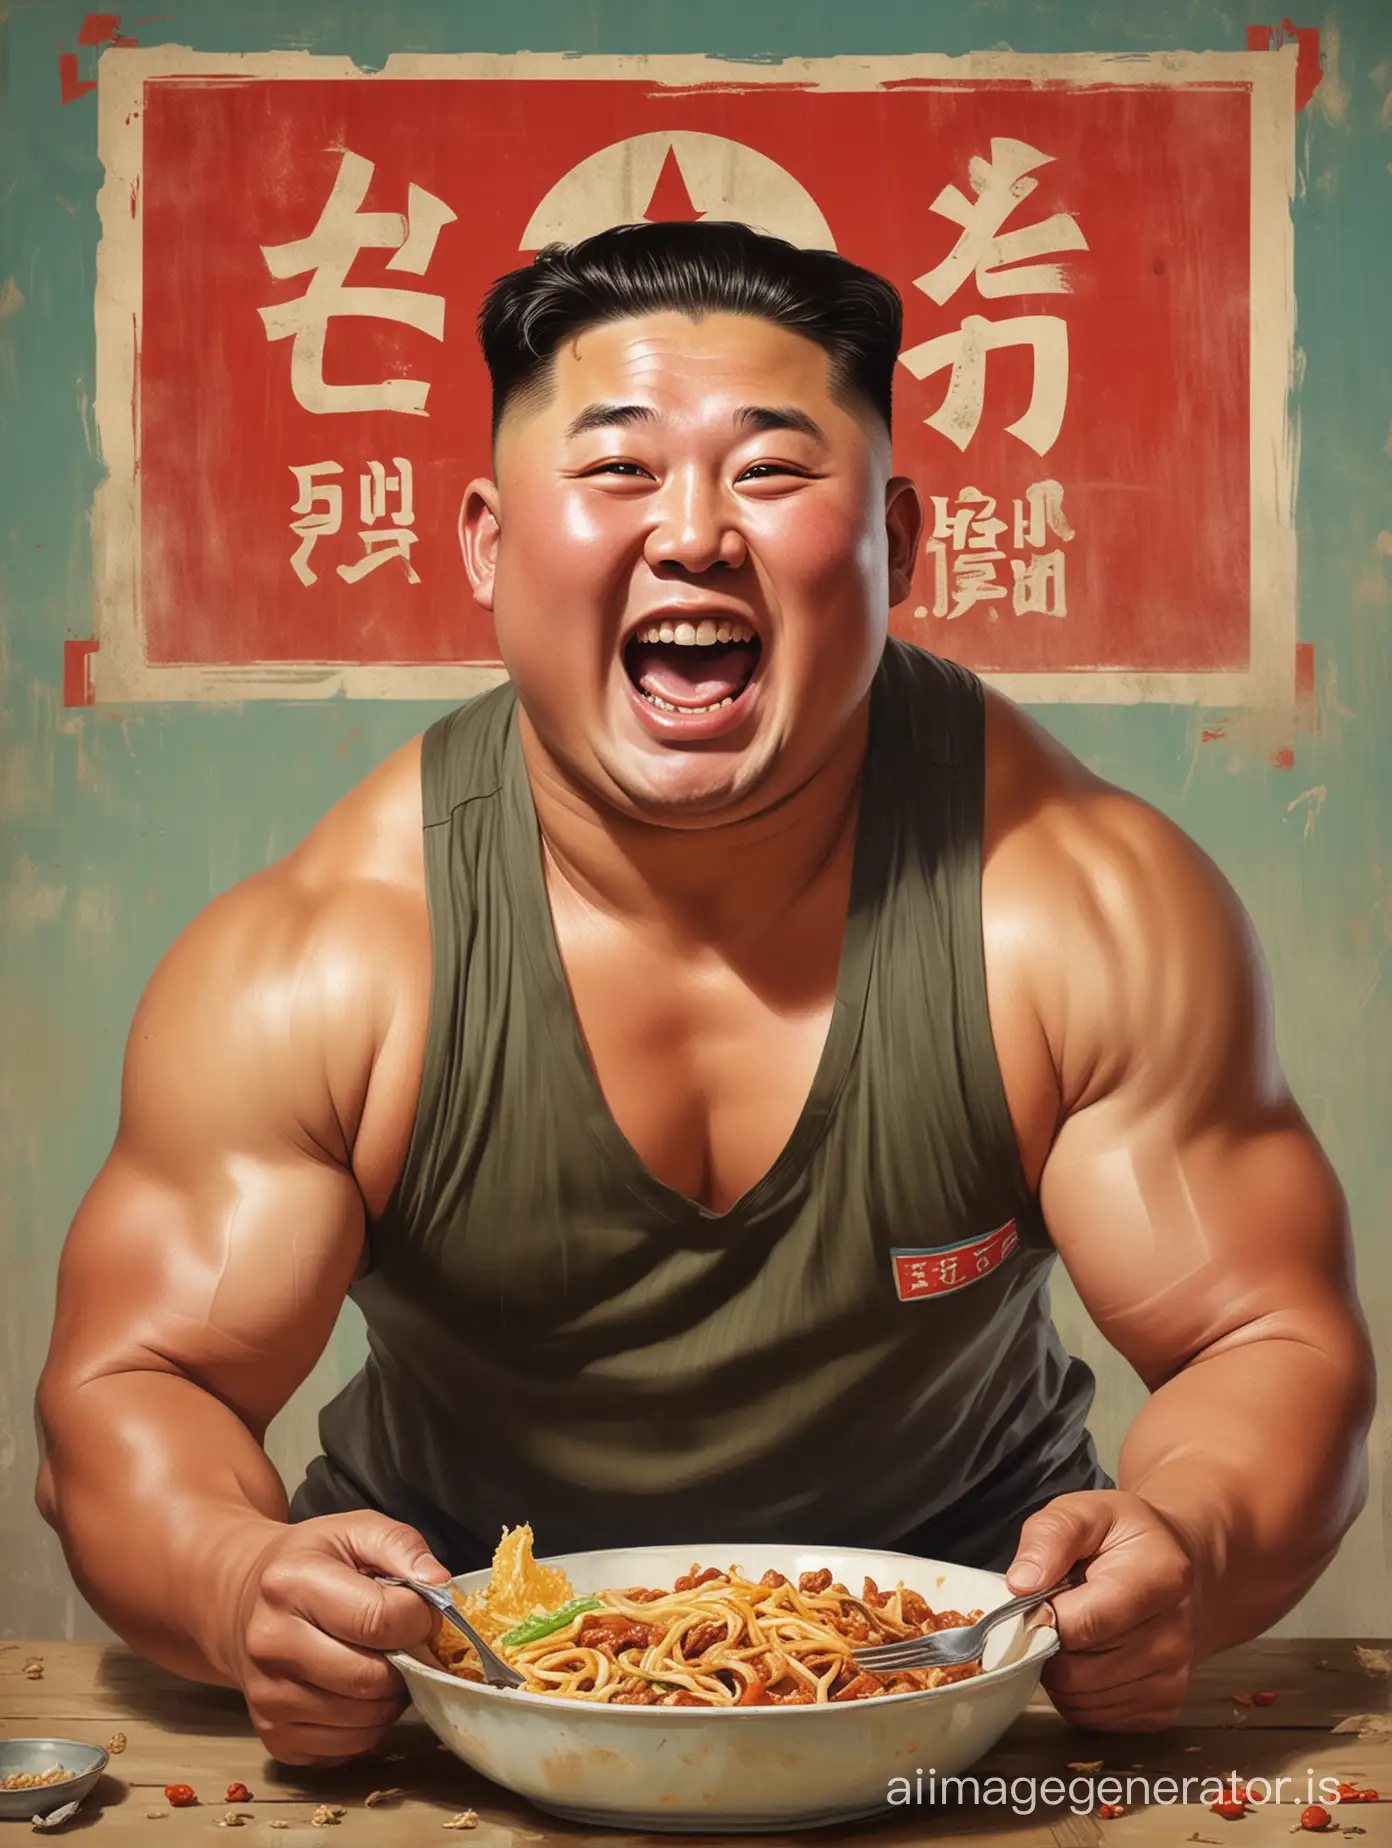 Kim-Jong-Un-Powerlifting-Propaganda-Portrait